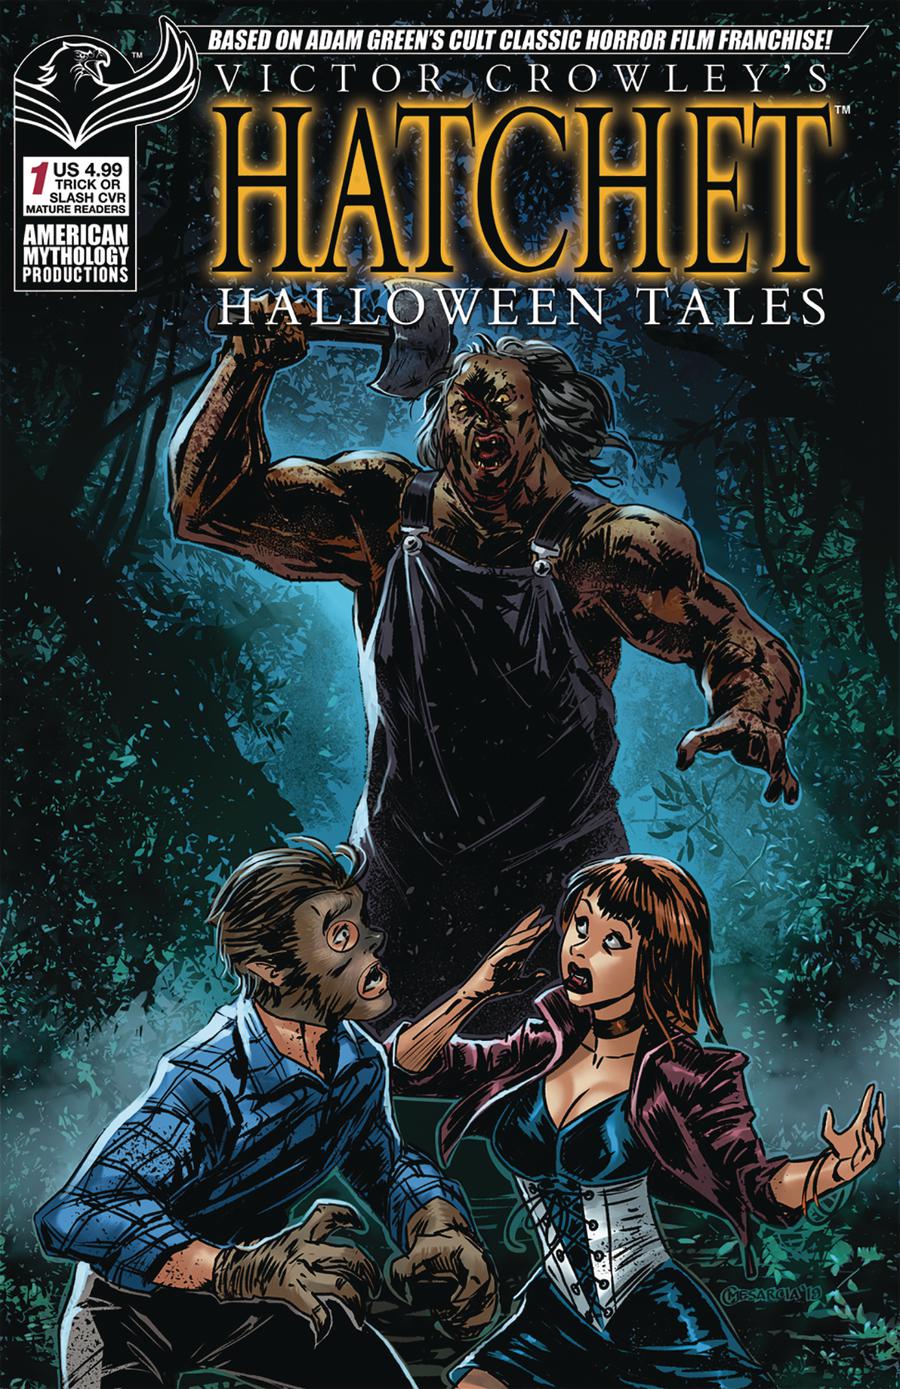 Victor Crowleys Hatchet Halloween Tales #1 Cover D Variant Cyrus Mesarcia Trick Or Slash Cover